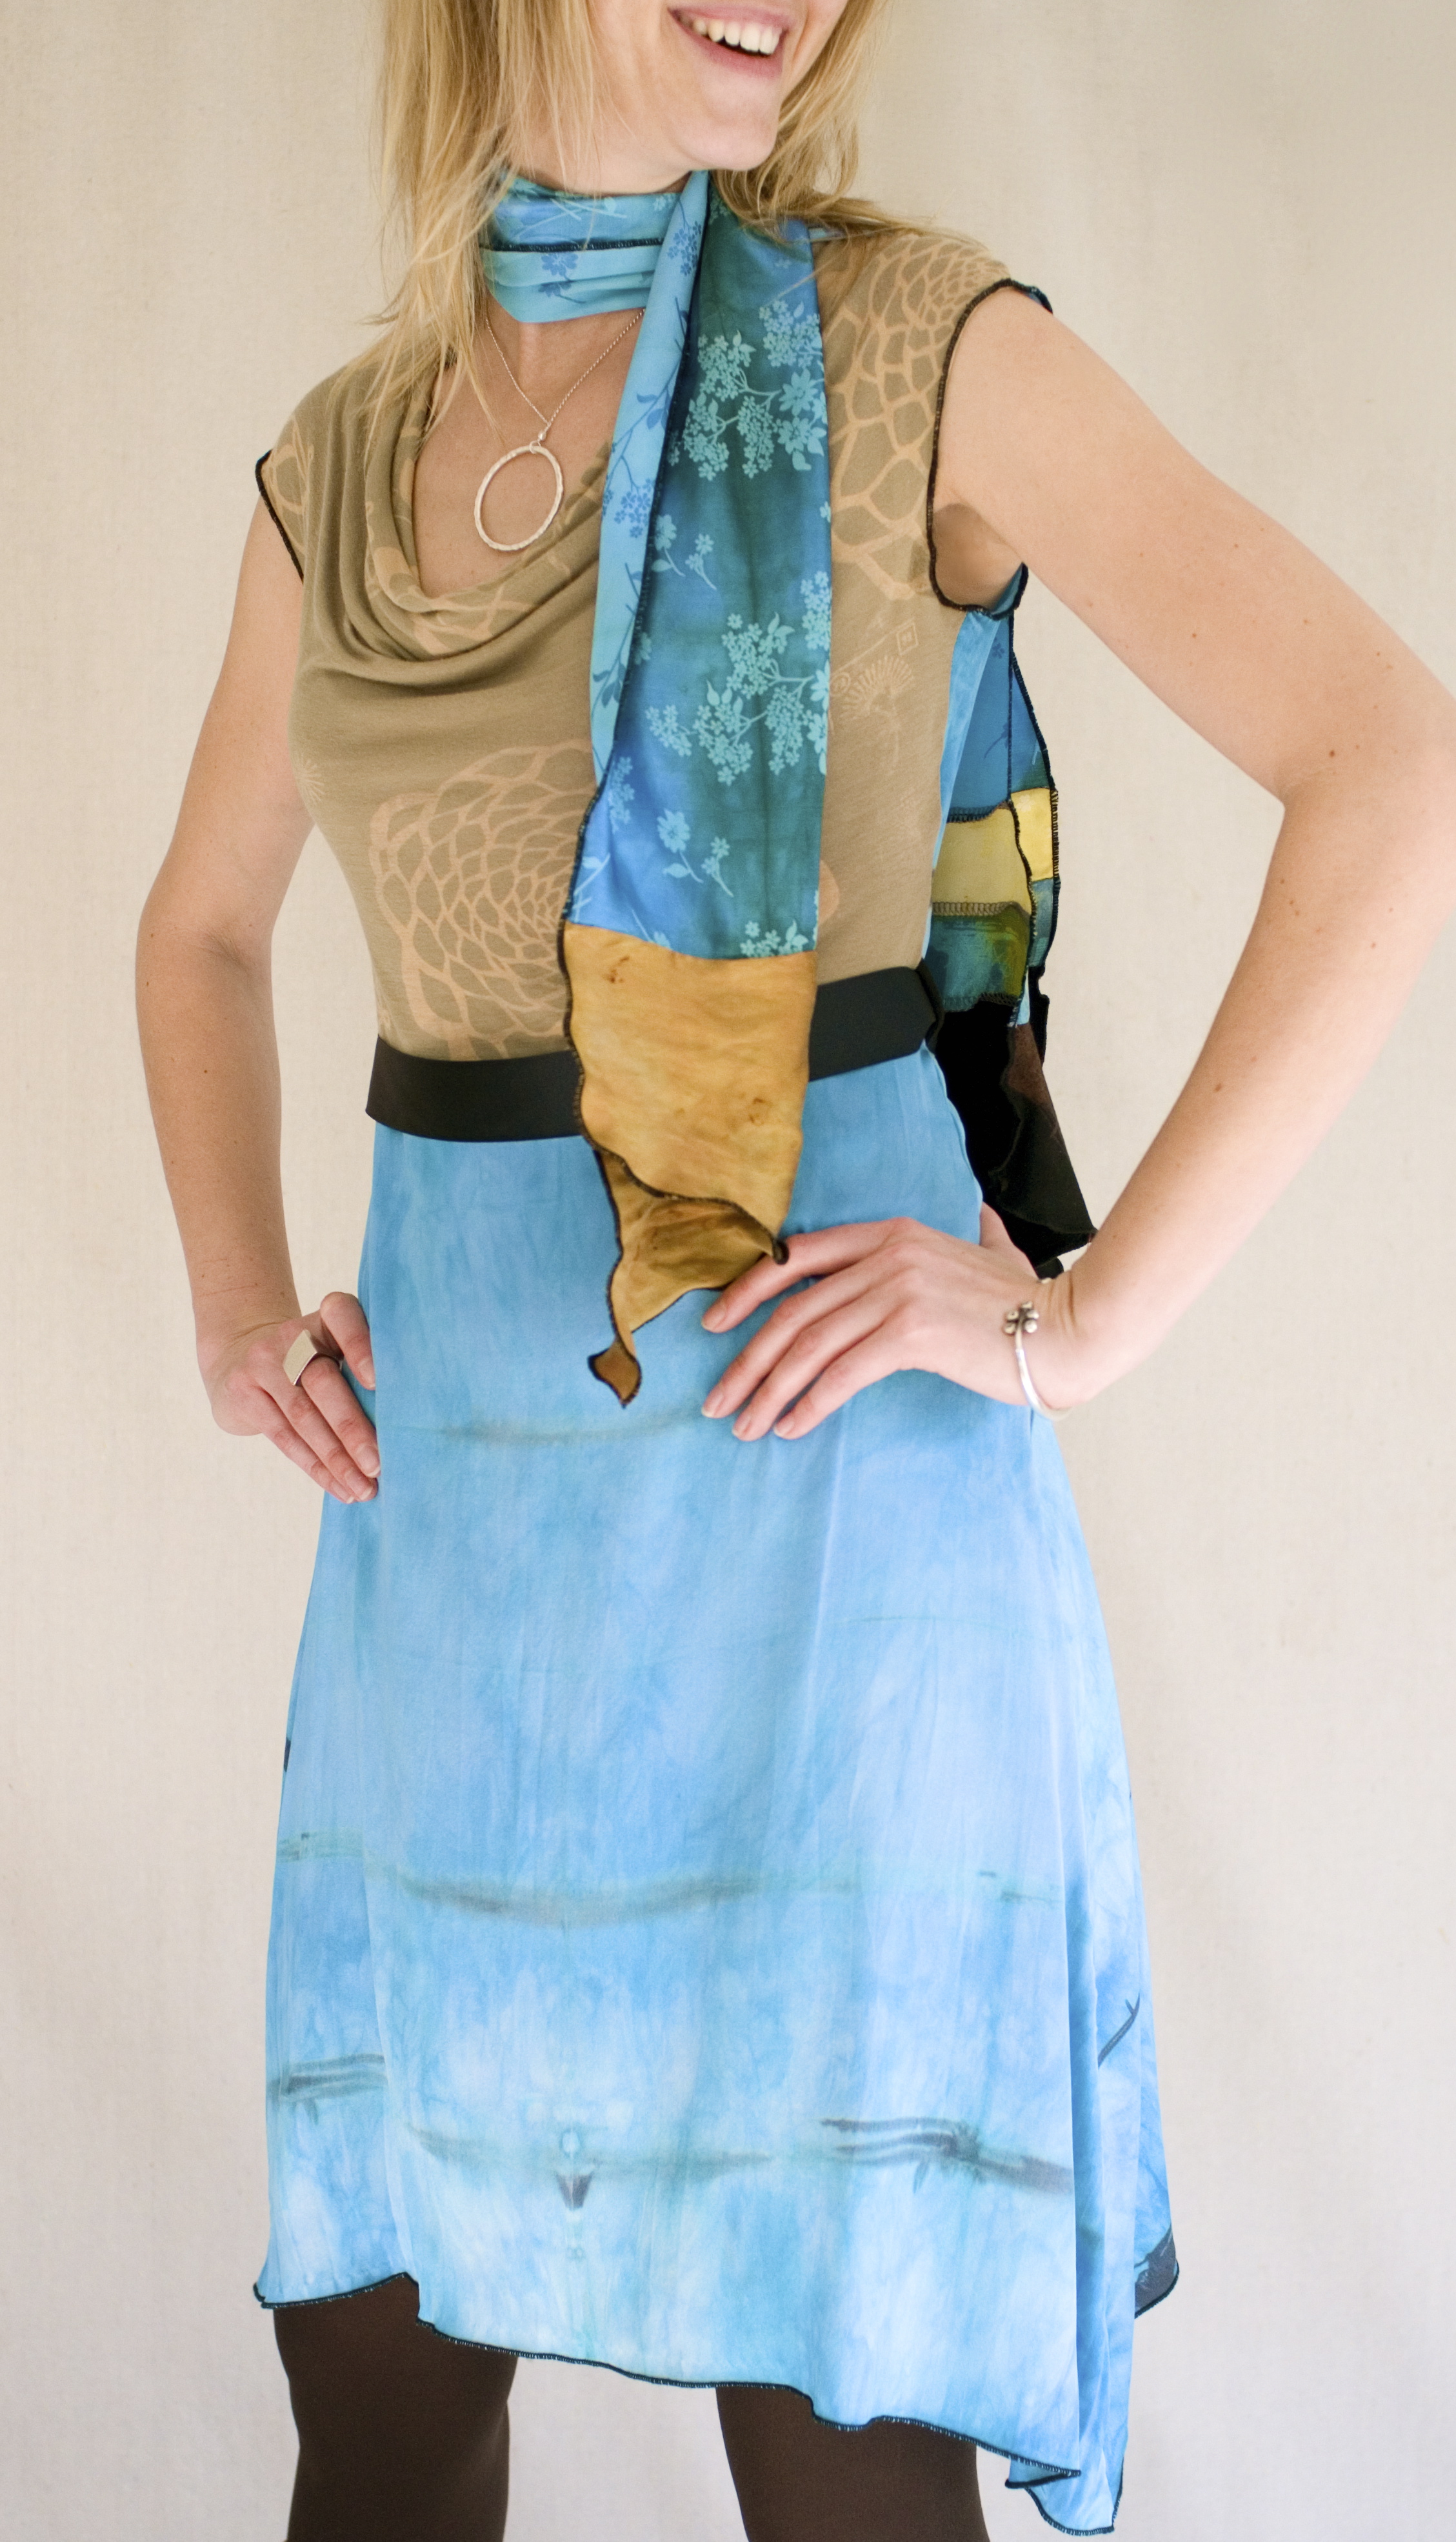 Prism Dress & Collage Scarf. Photo by Jesse Kitt